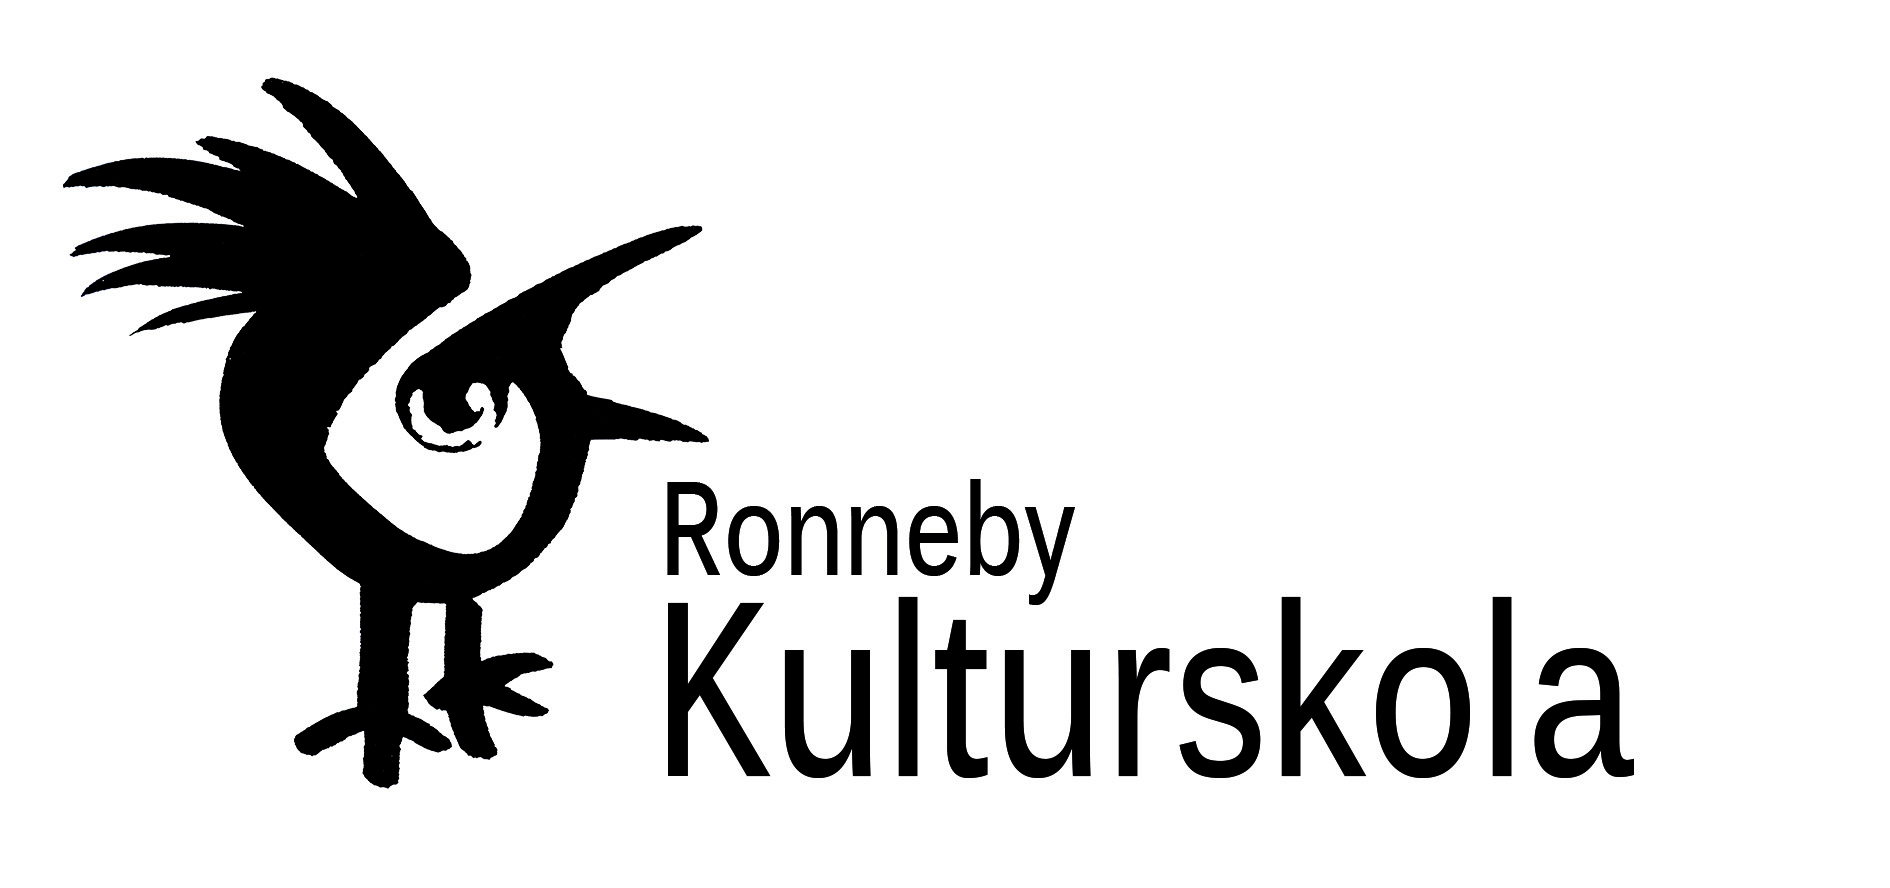 Ronneby Kulturskolas logga